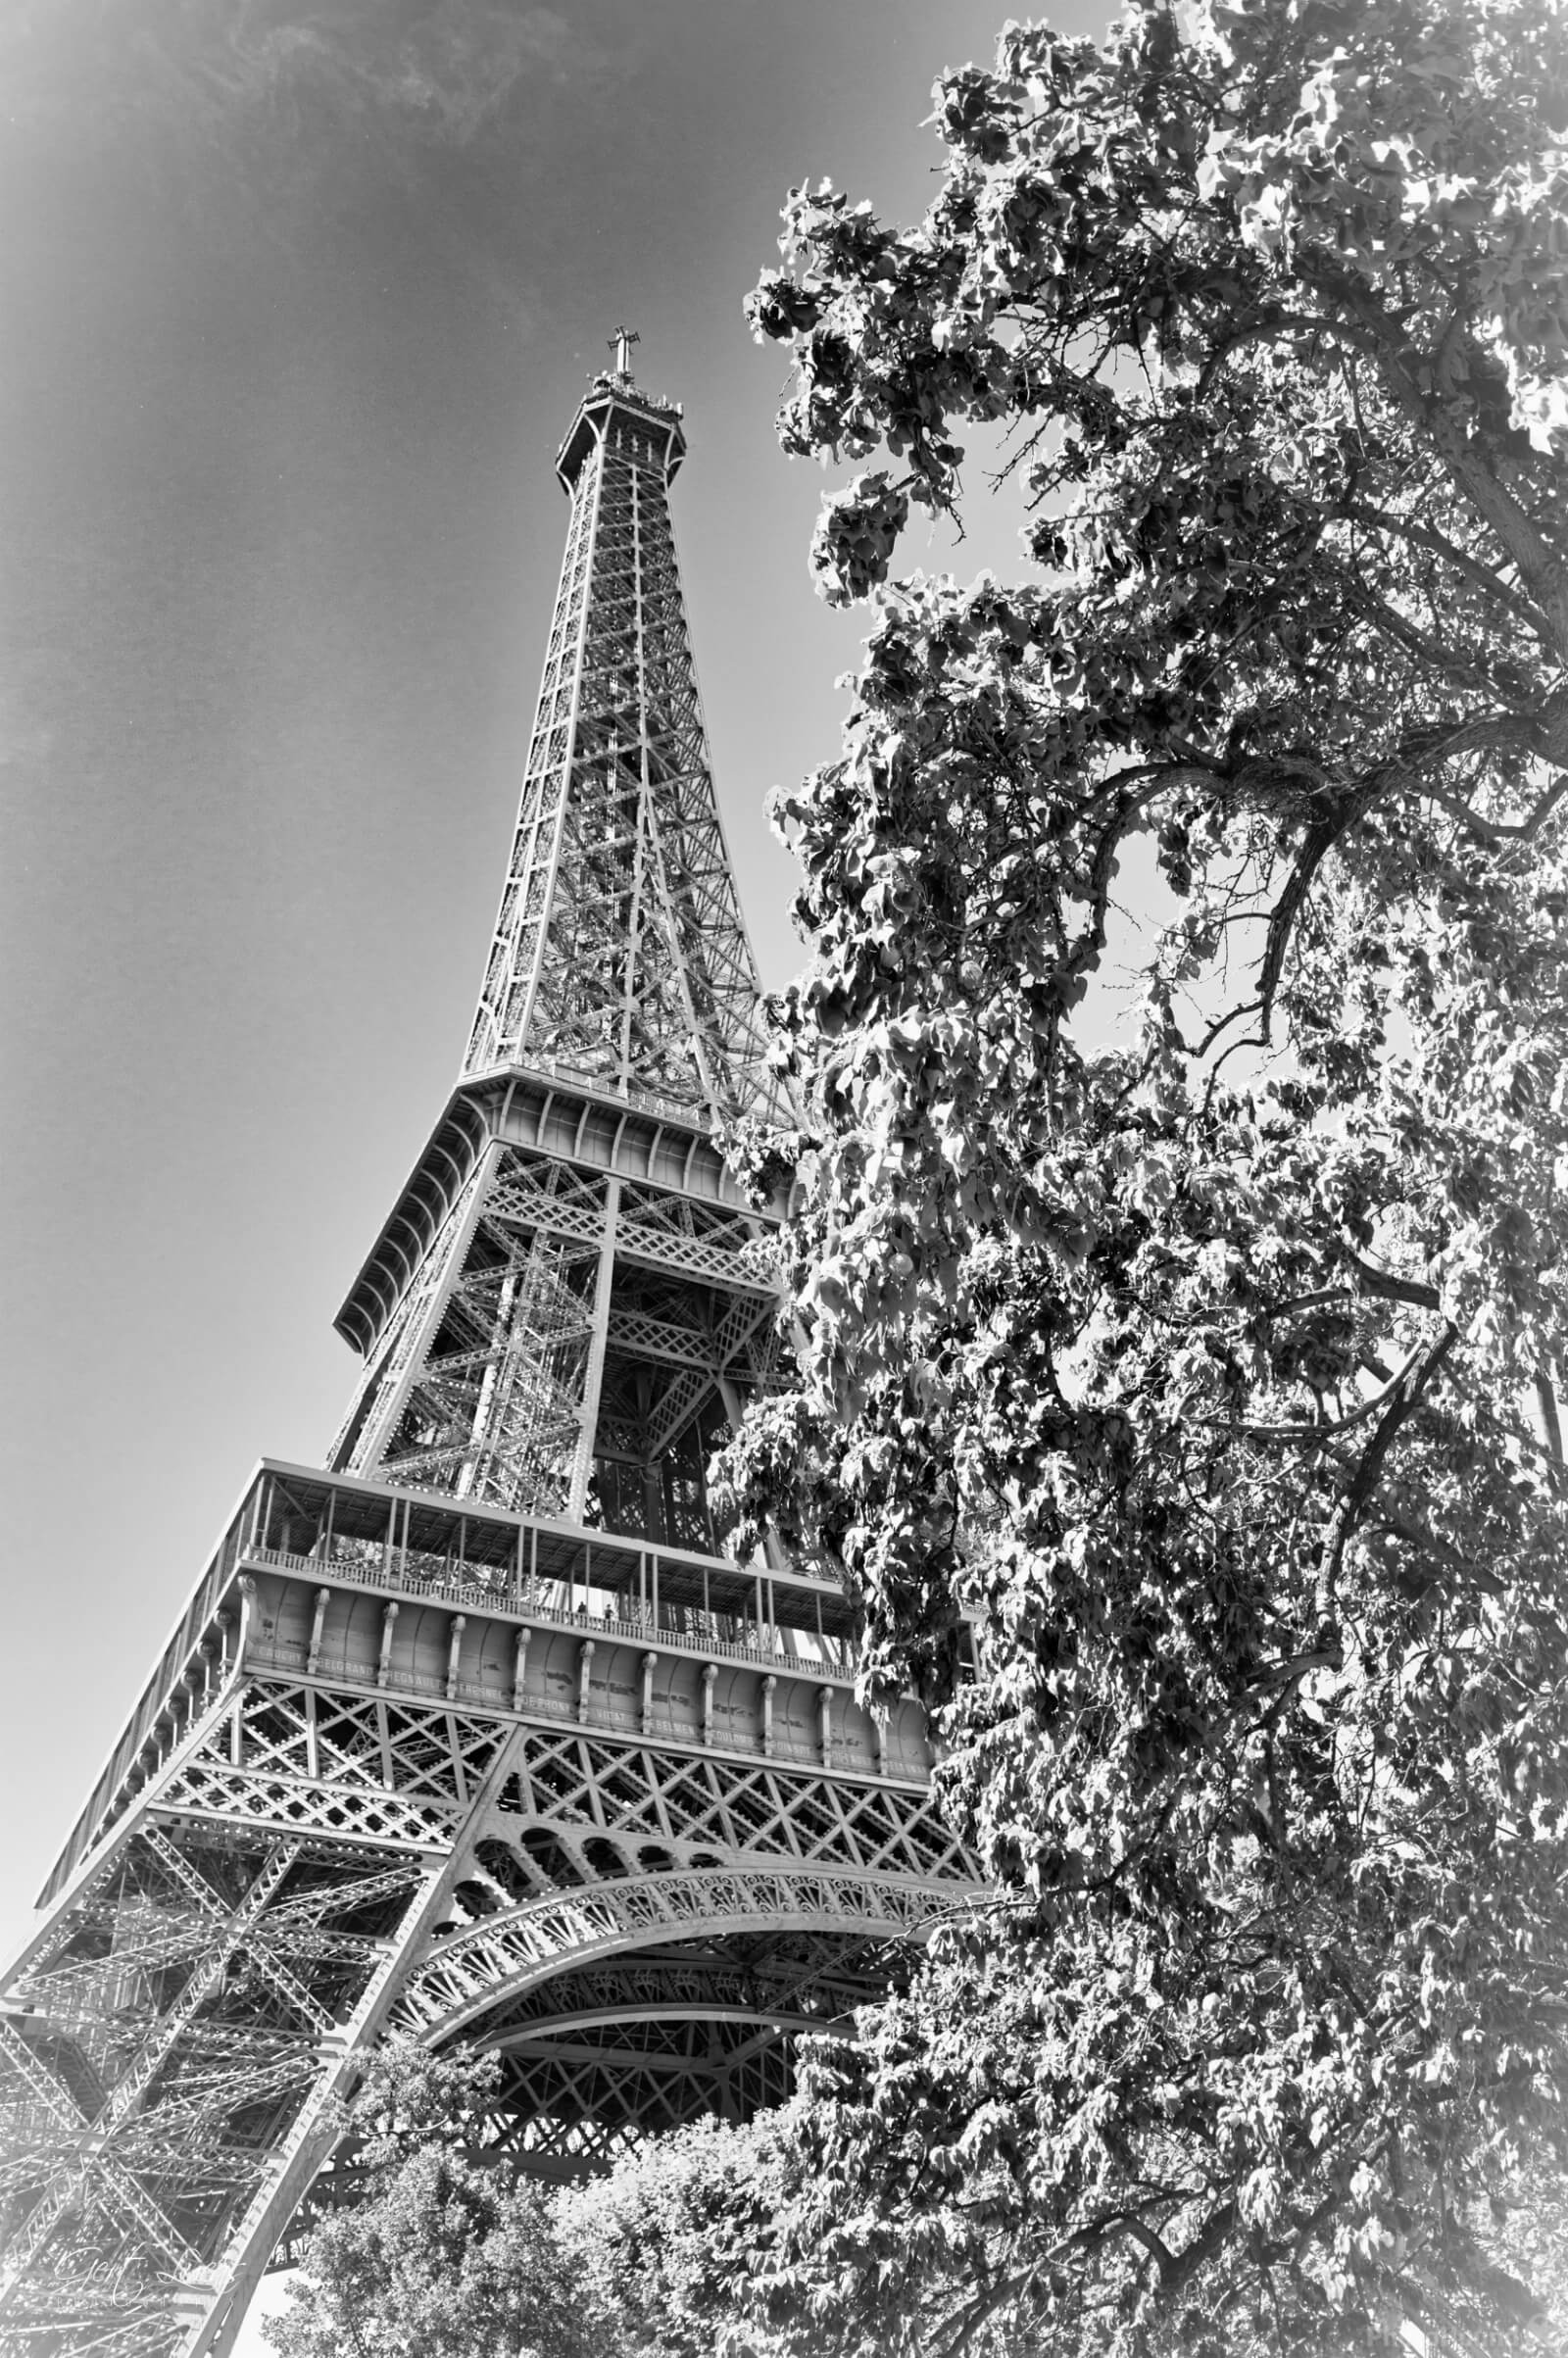 Image of Eiffel Tower, Paris by Gert Lucas